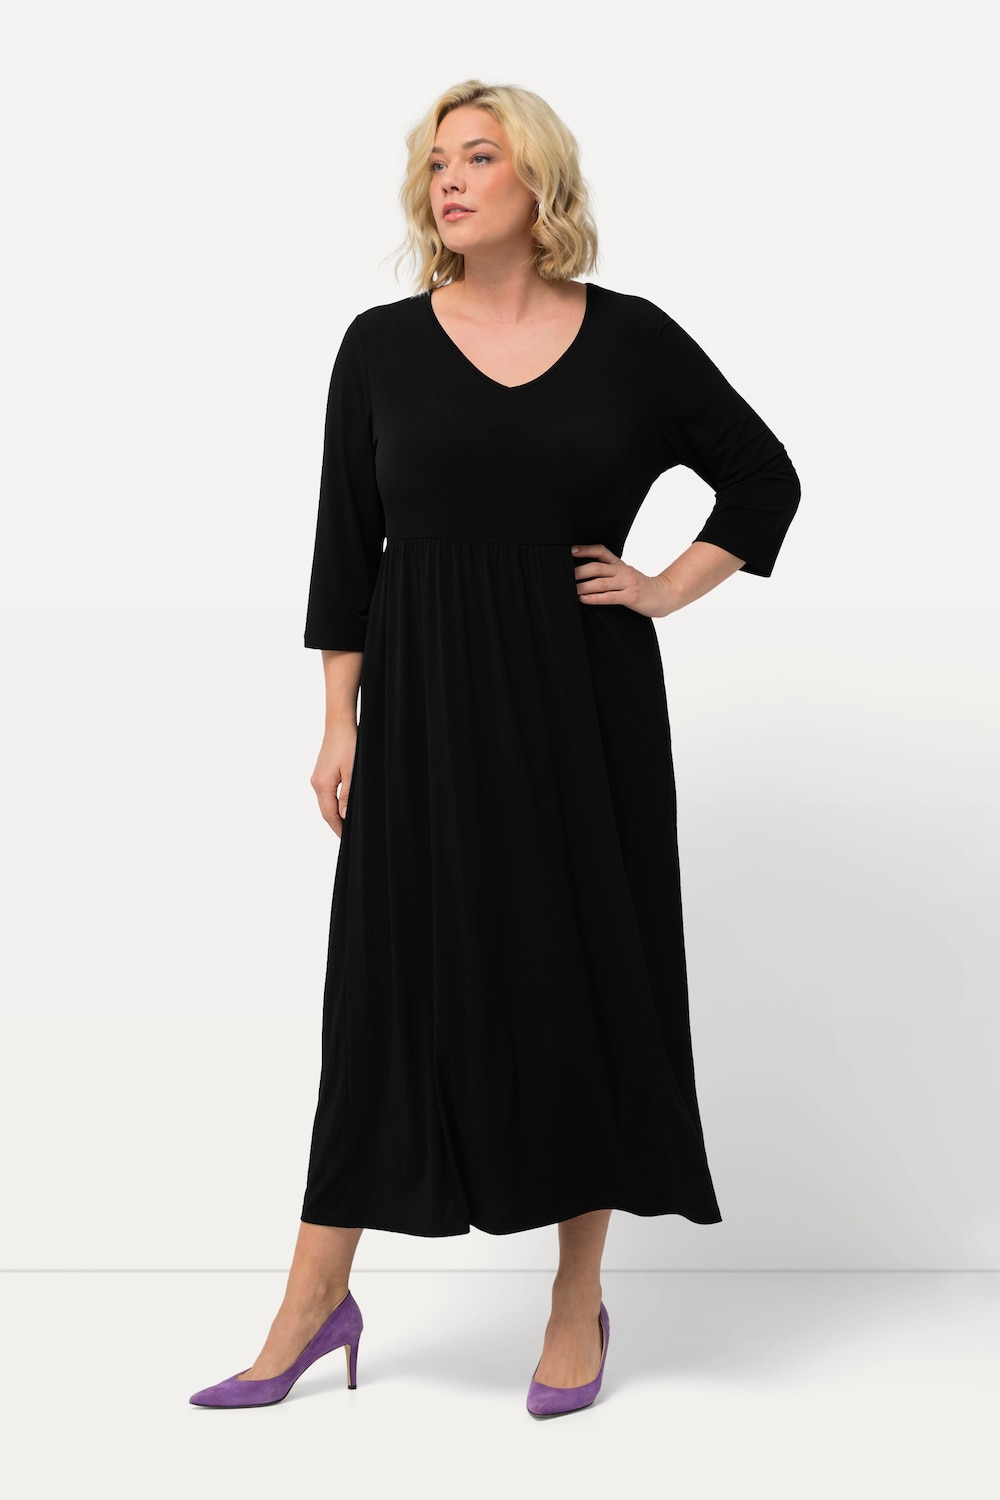 Grote Maten Jersey jurk, Dames, zwart, Maat: 66/68, Polyester, Ulla Popken